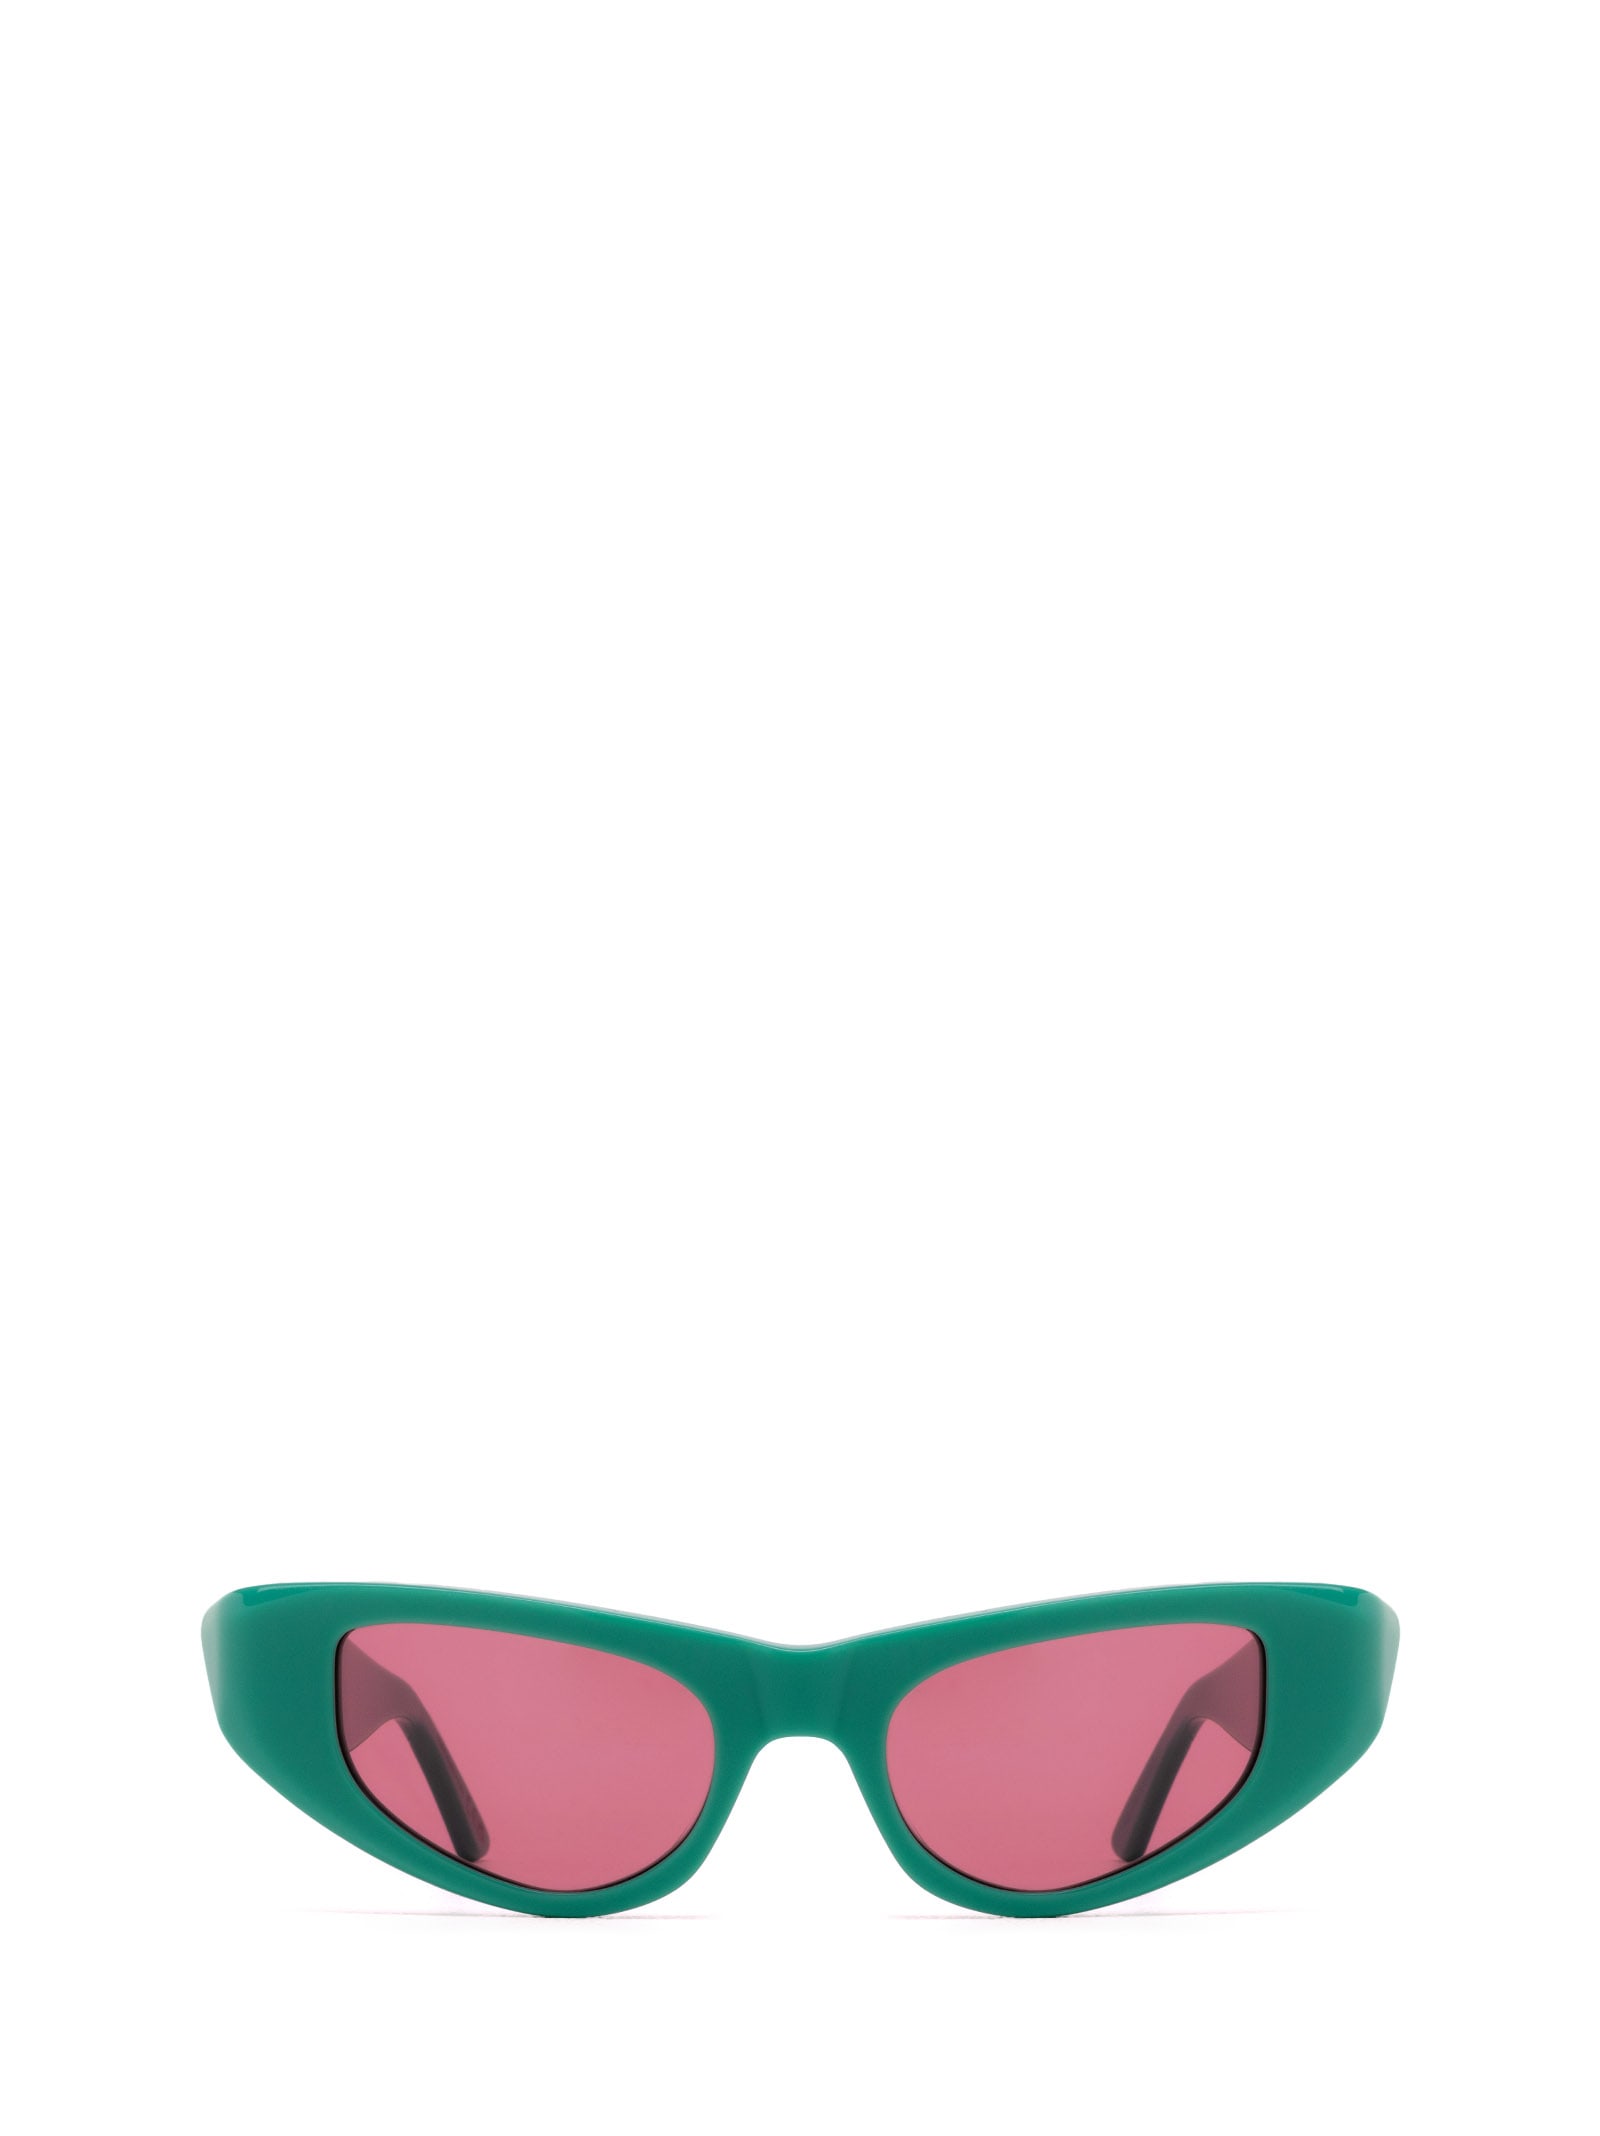 Netherworld Green Sunglasses